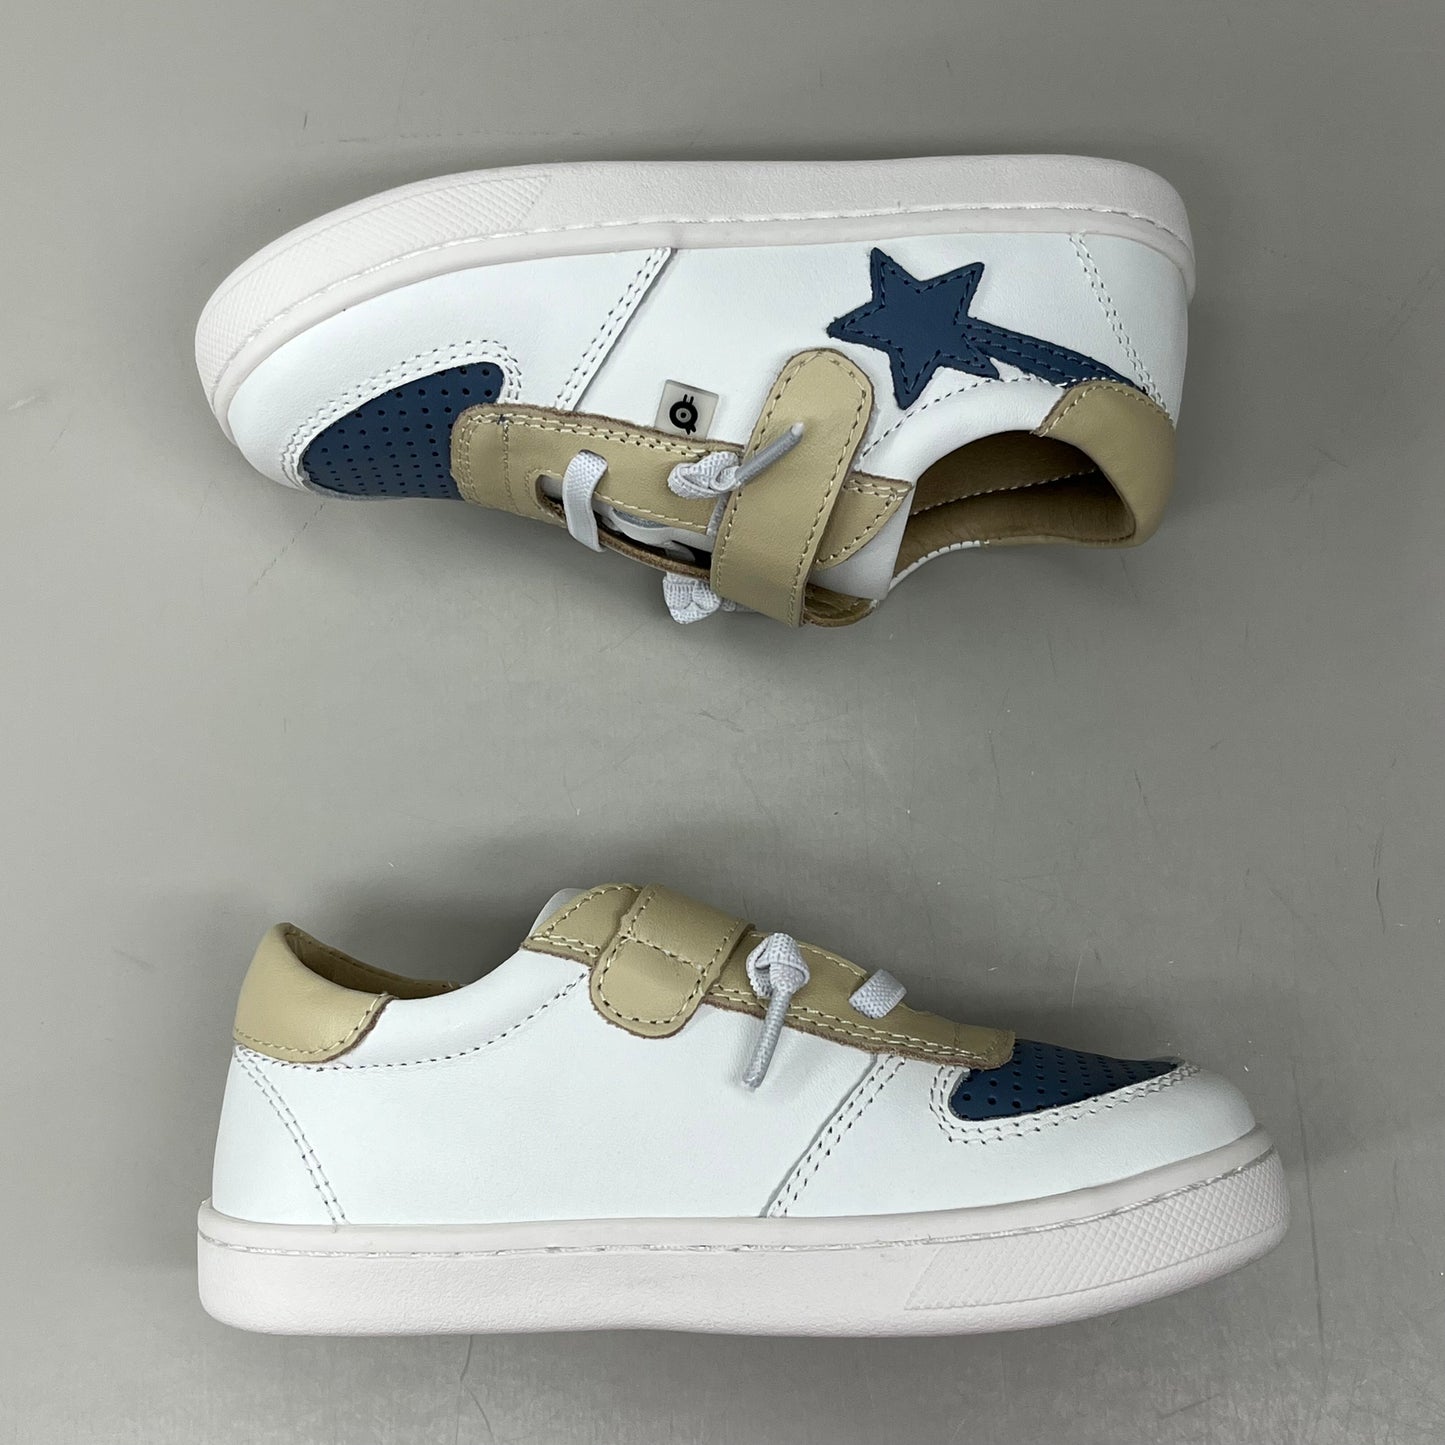 OLD SOLES Runsky Sneakers Leather Shoe Kid’s Sz 26 US 9.5 Cream/Indigo/Snow #6135